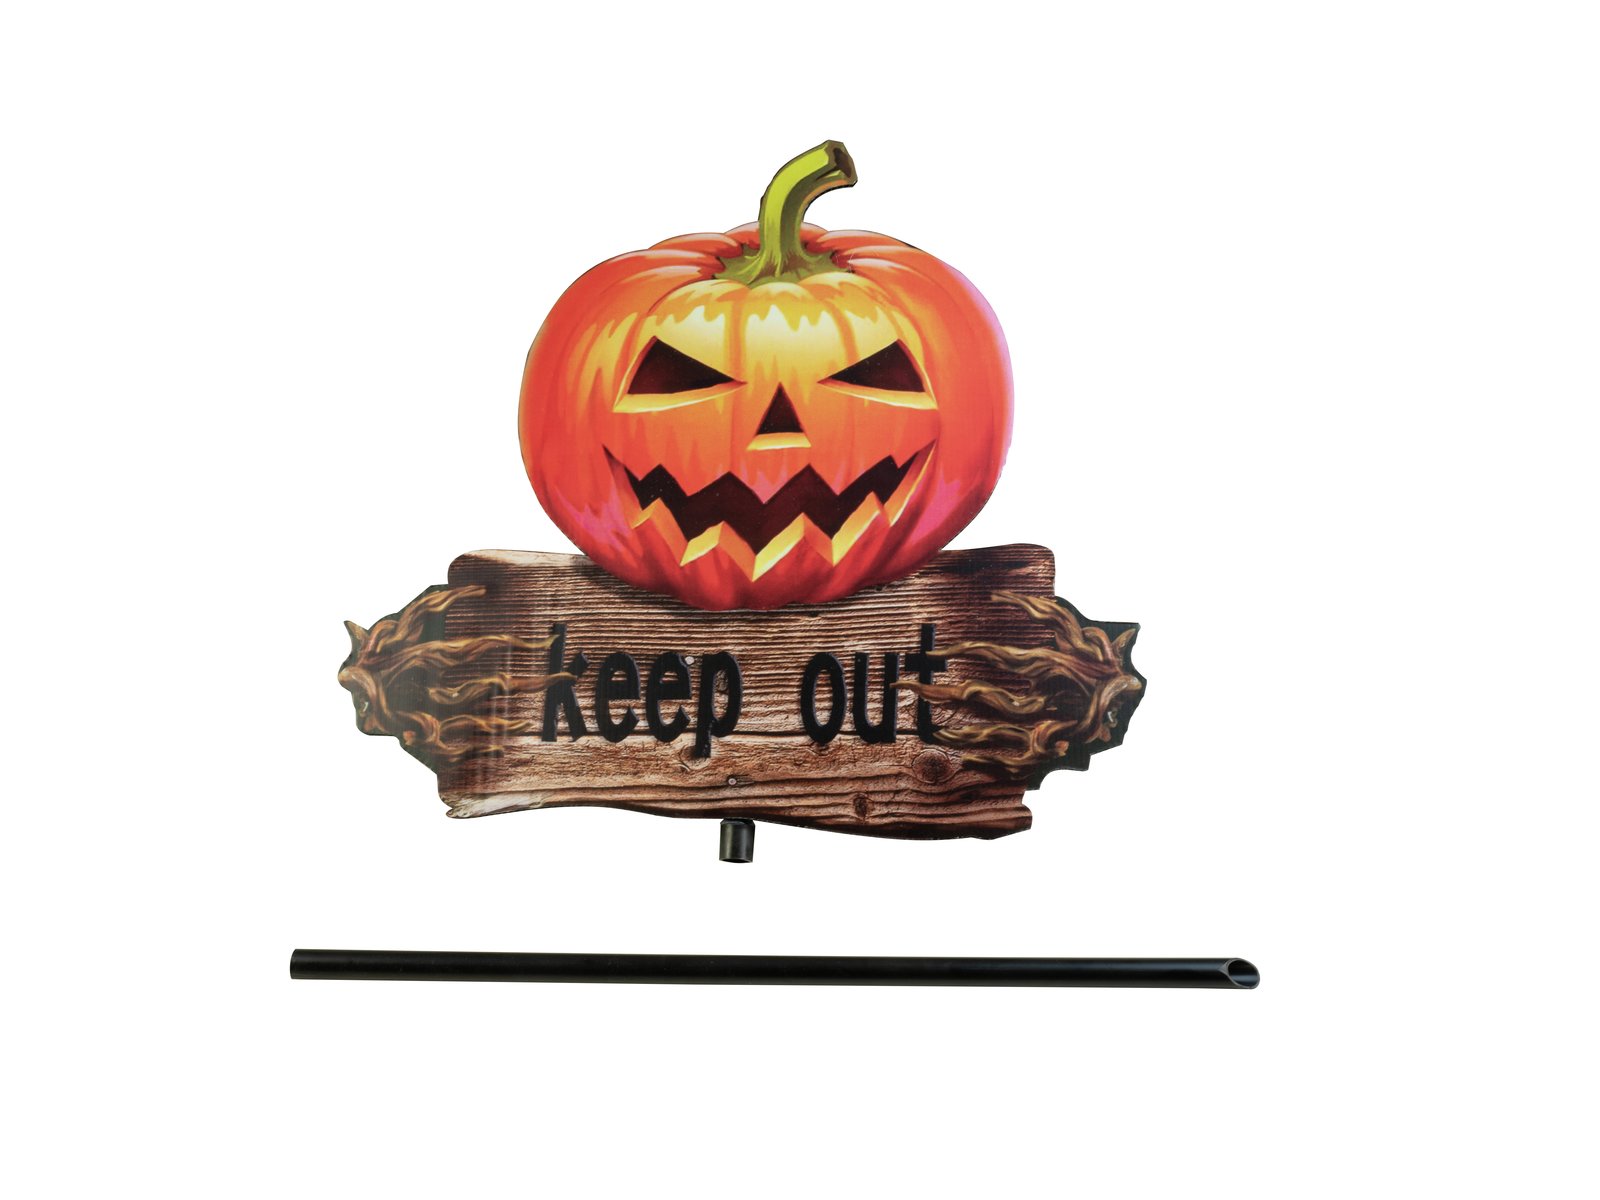 EUROPALMS Halloween Pumpkin “KEEP OUT” with Picker, 50cm